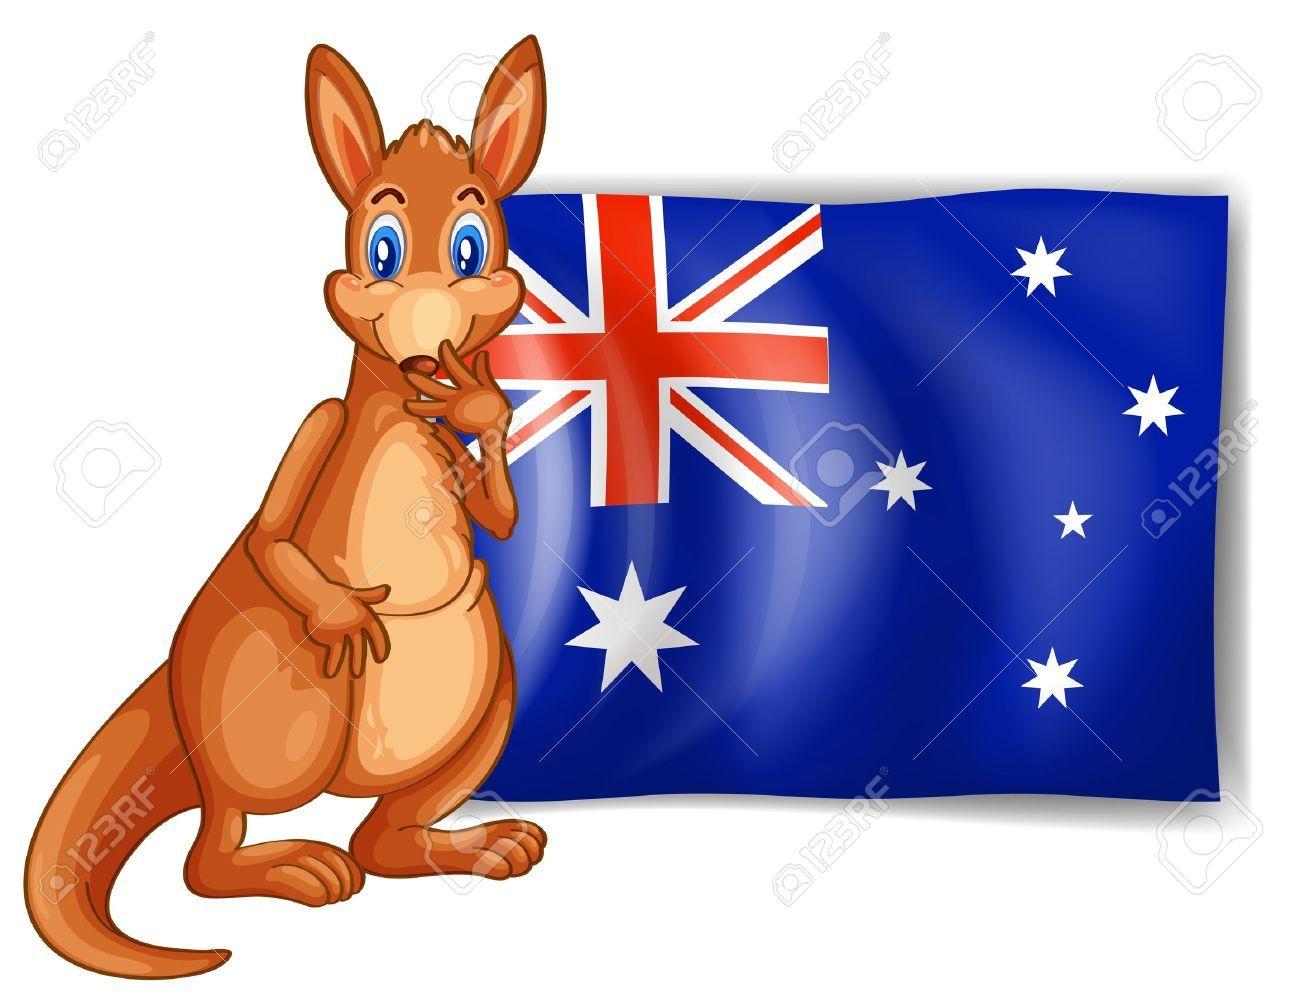 Australia Kangaroo Clip Art Logo - Australian Clipart.com. Free for personal use